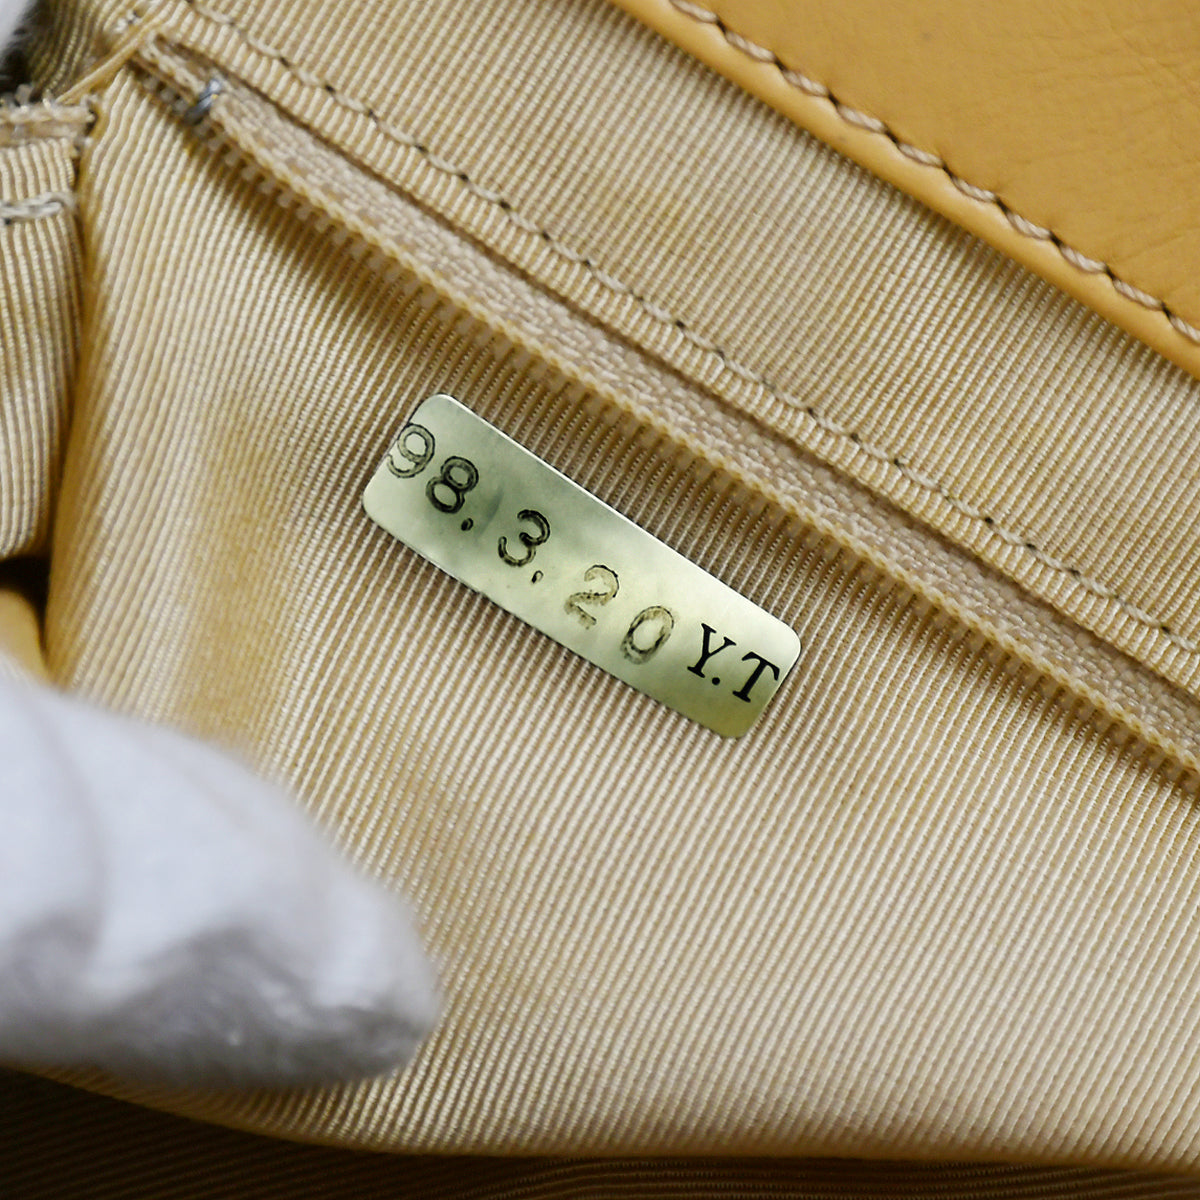 Chanel Brown Lambskin Tote Handbag